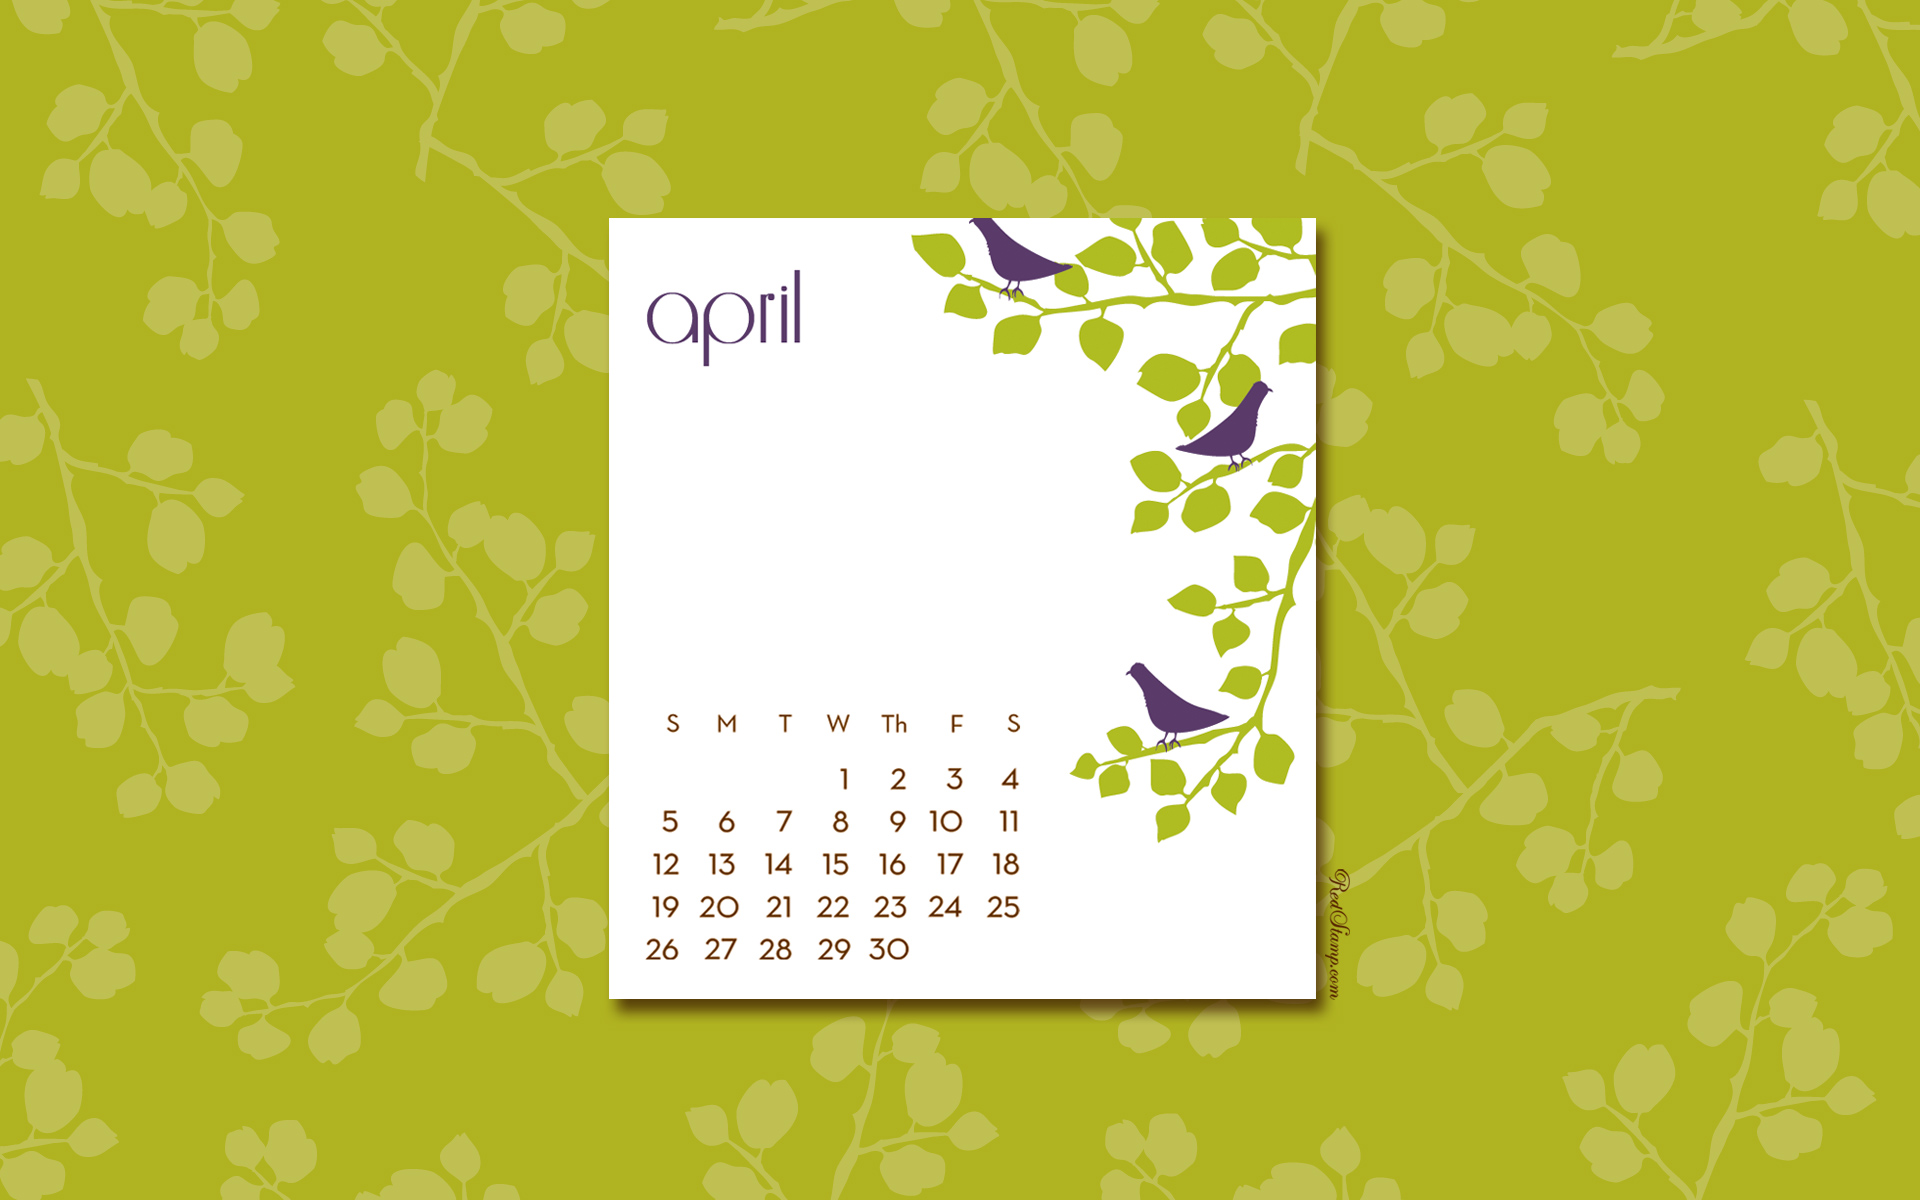 Desktop Puter Calendar Image April Wallpaper Redstamp